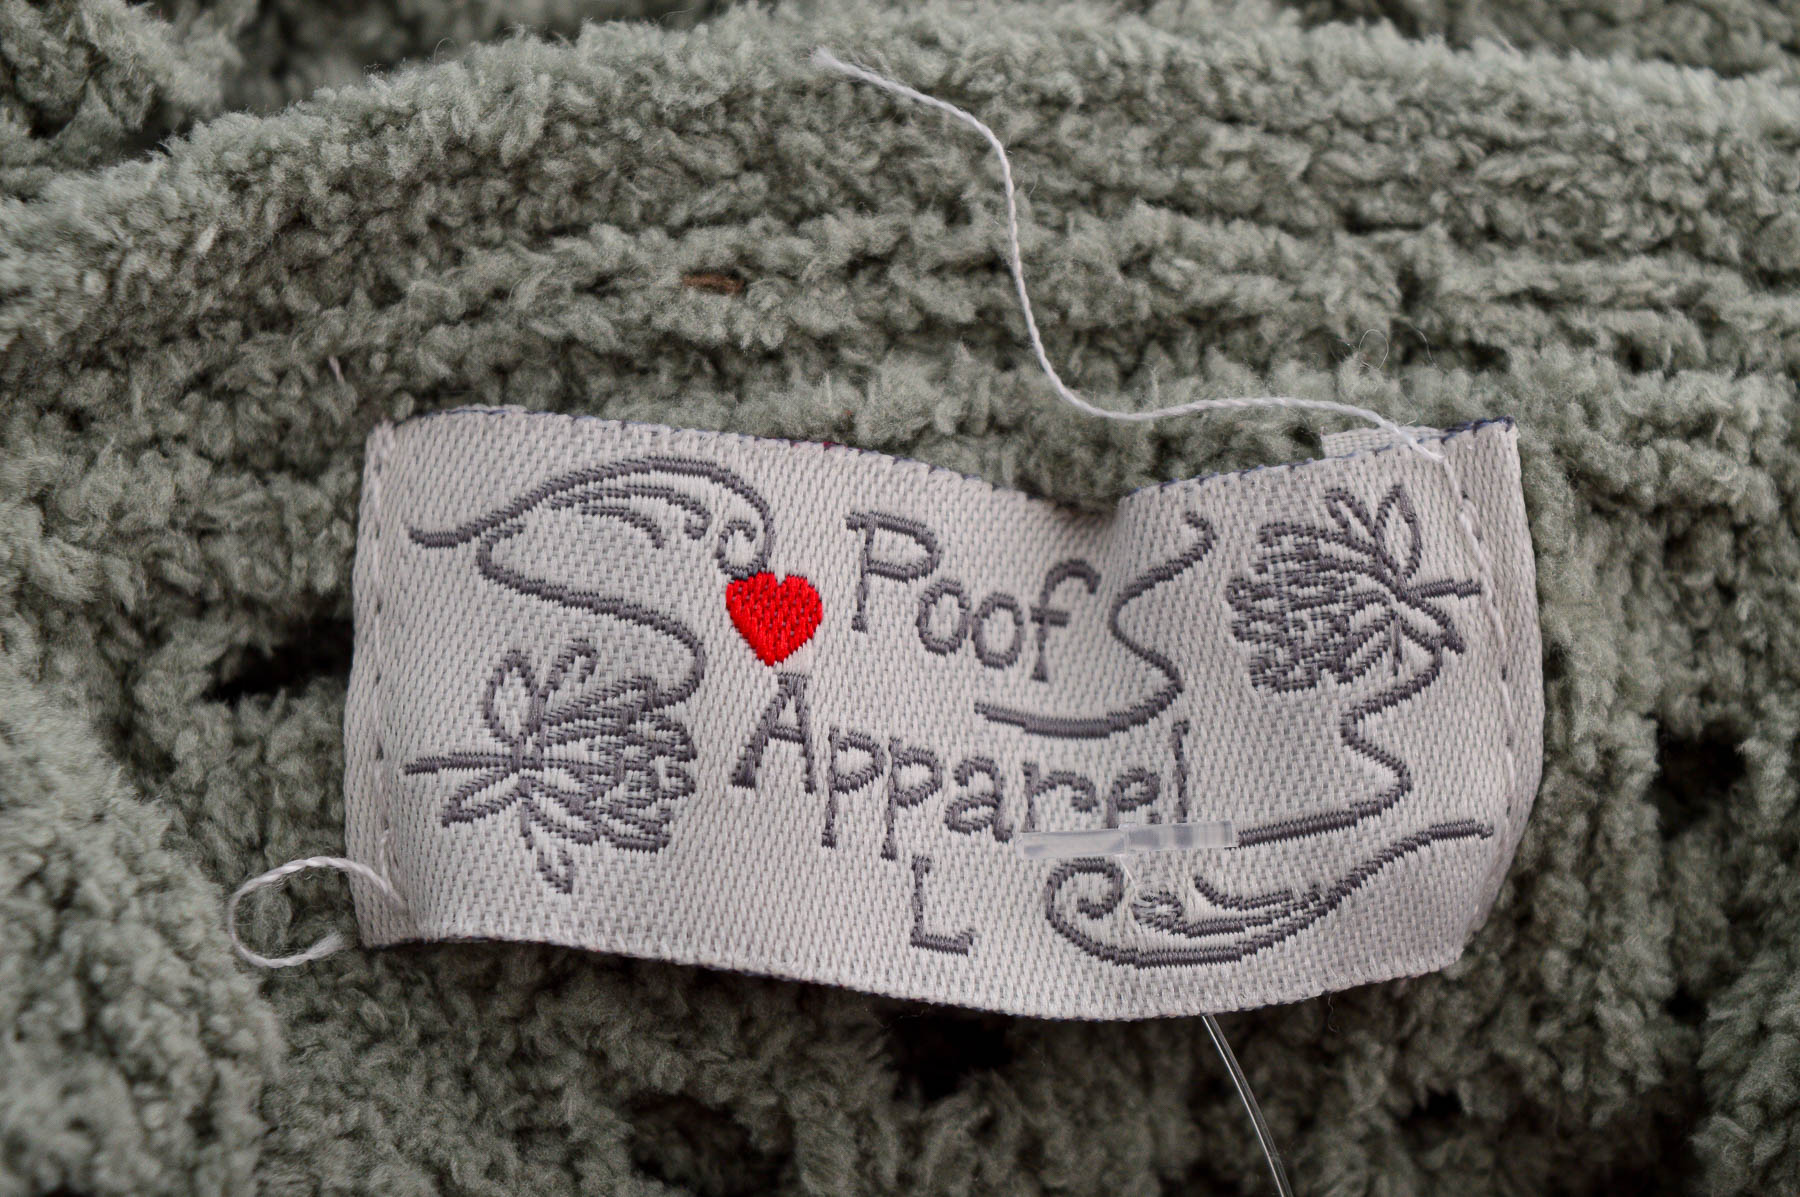 Дамски пуловер - Poof Apparel - 2